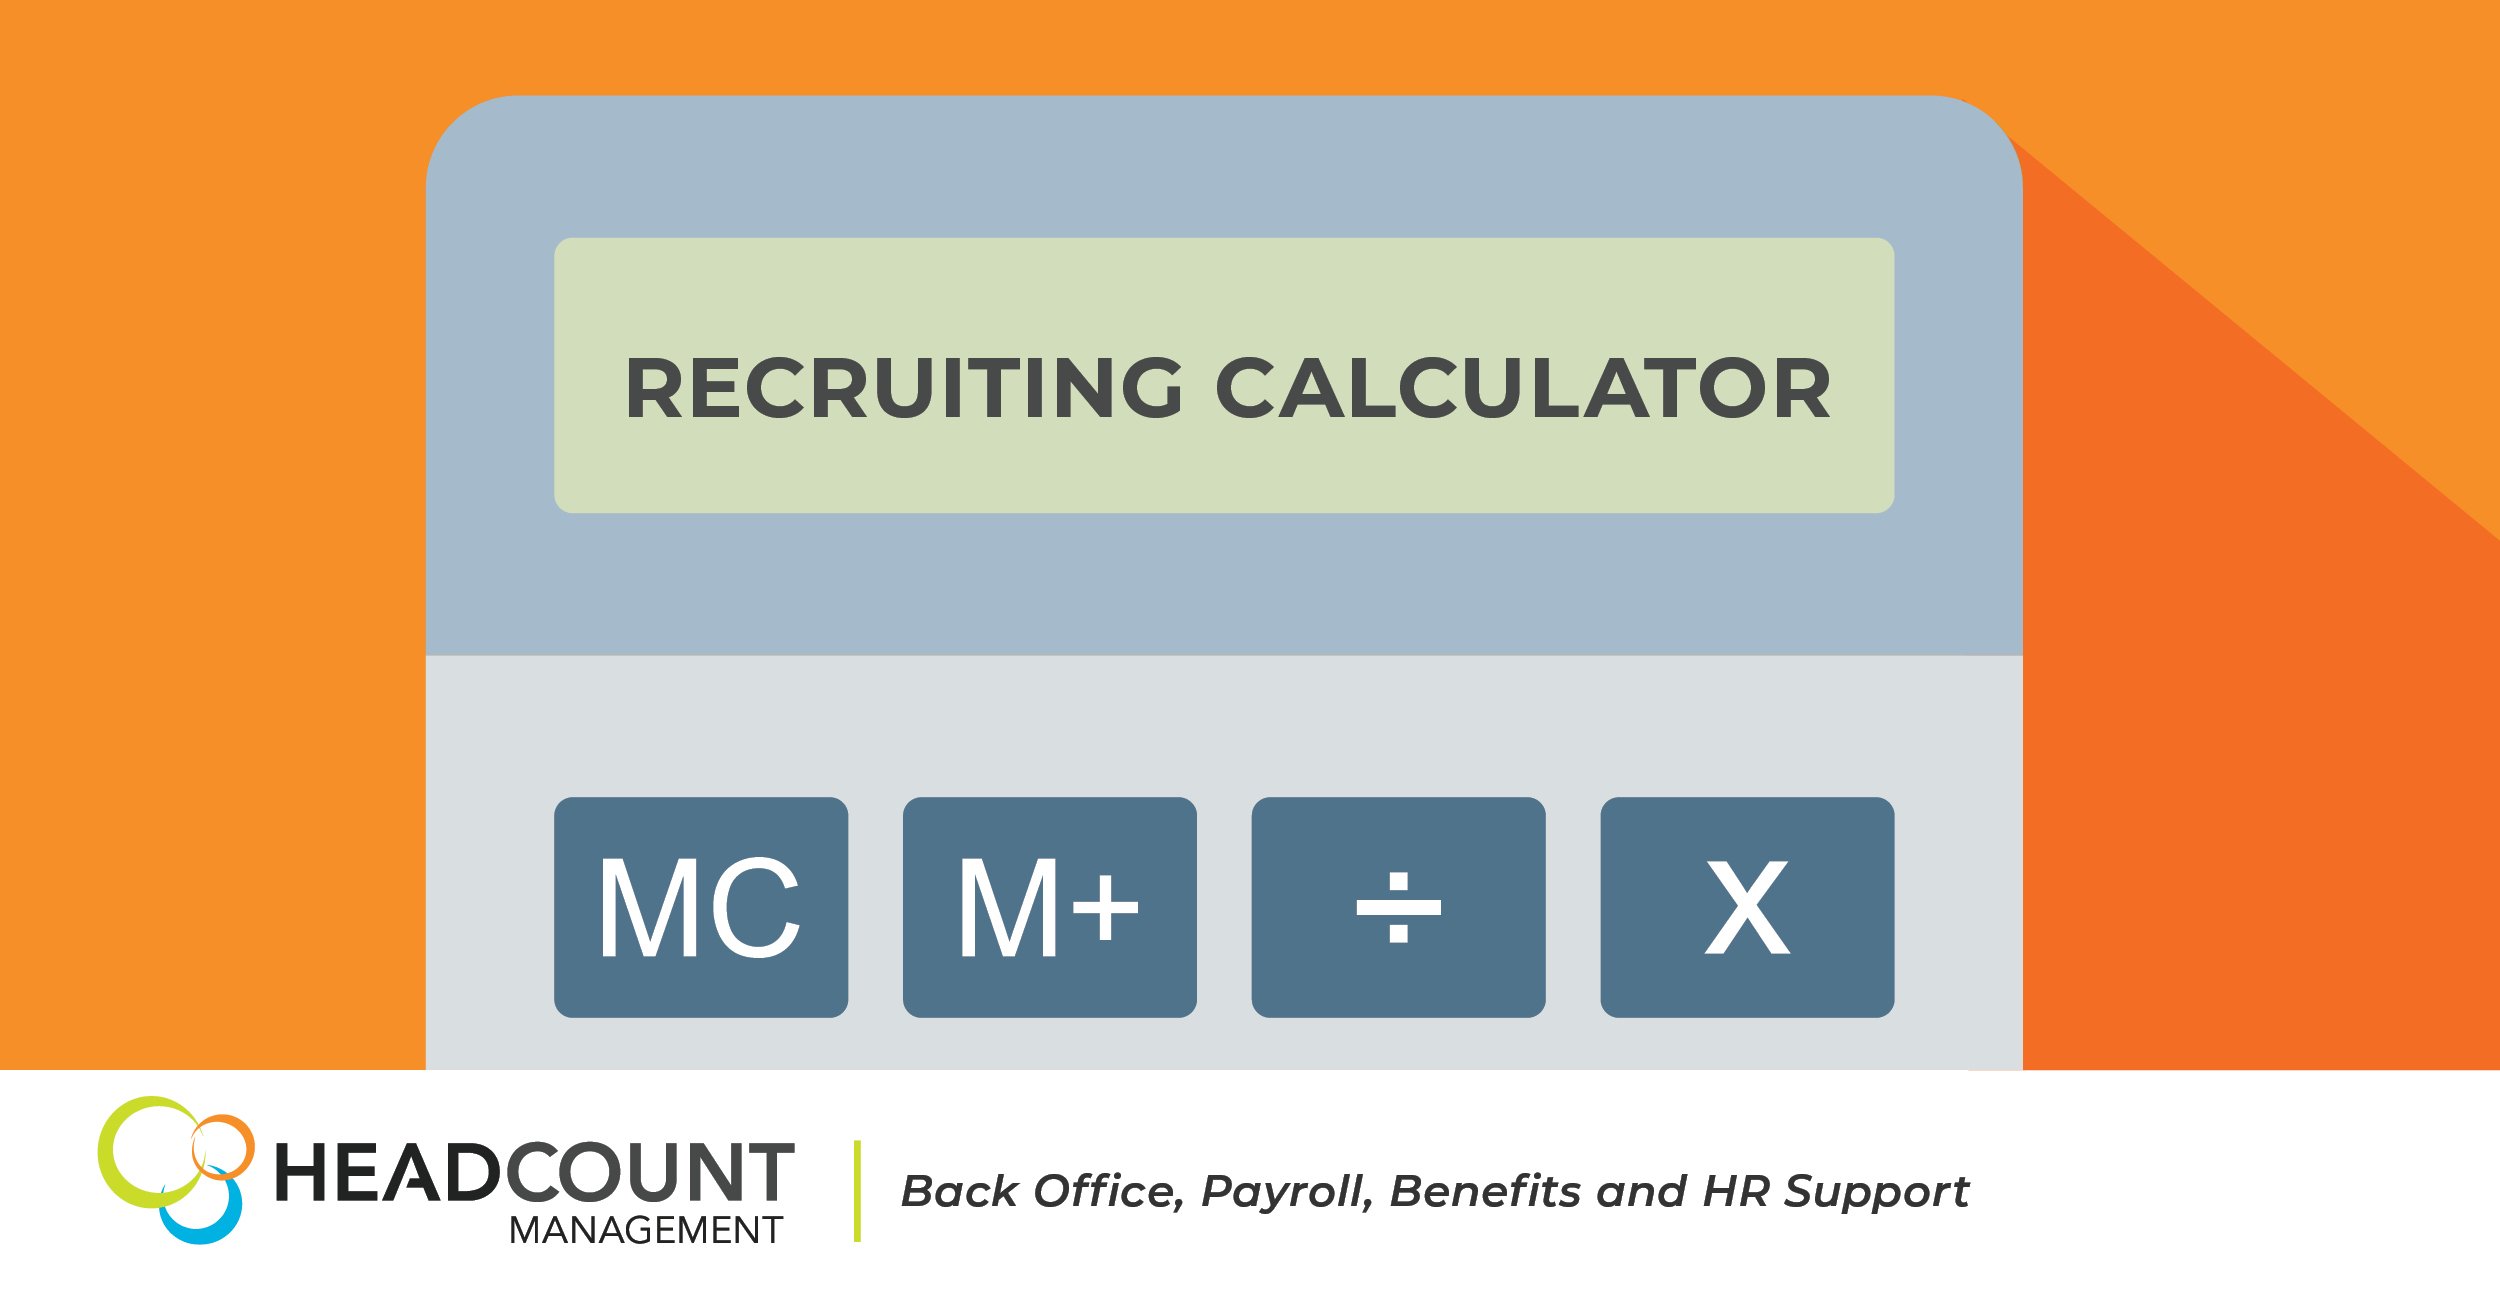 Gross Profit Margin Calculator for Recruiters